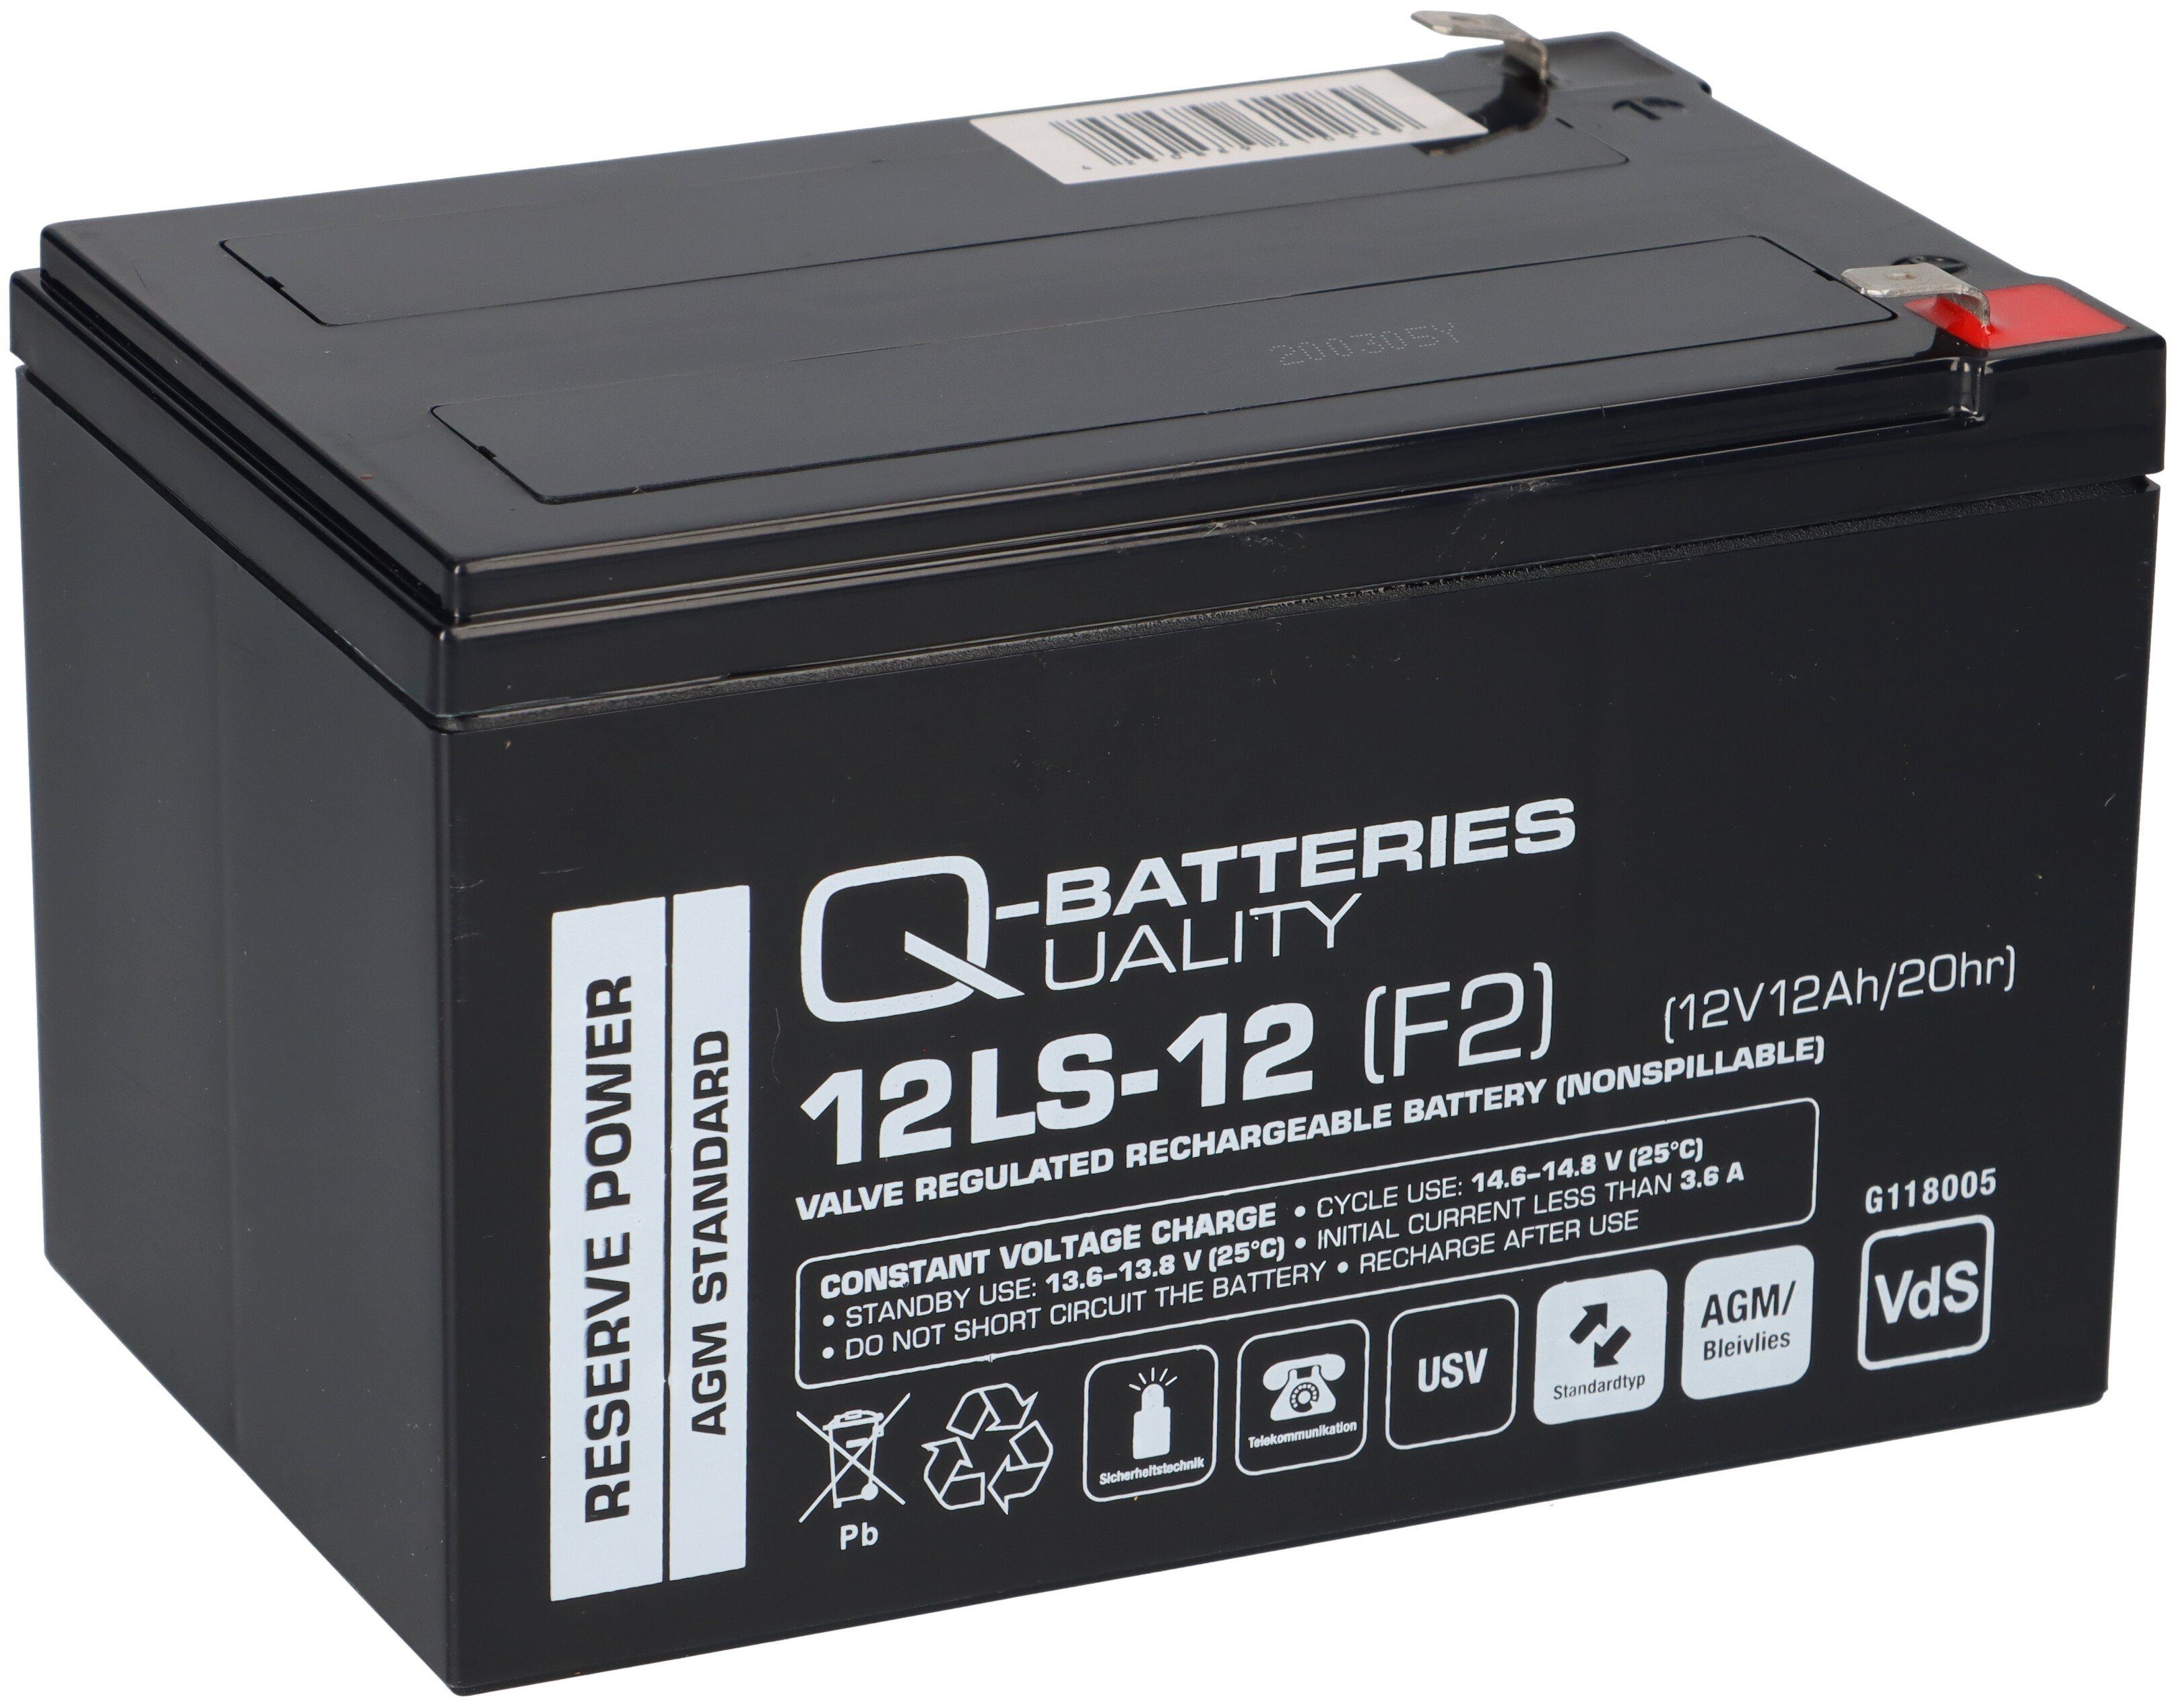 VdS 12Ah Blei-Vlies-Akku mit Q-Batteries VRLA 12V / 12LS-12 Q-Batteries Bleiakkus F2 AGM